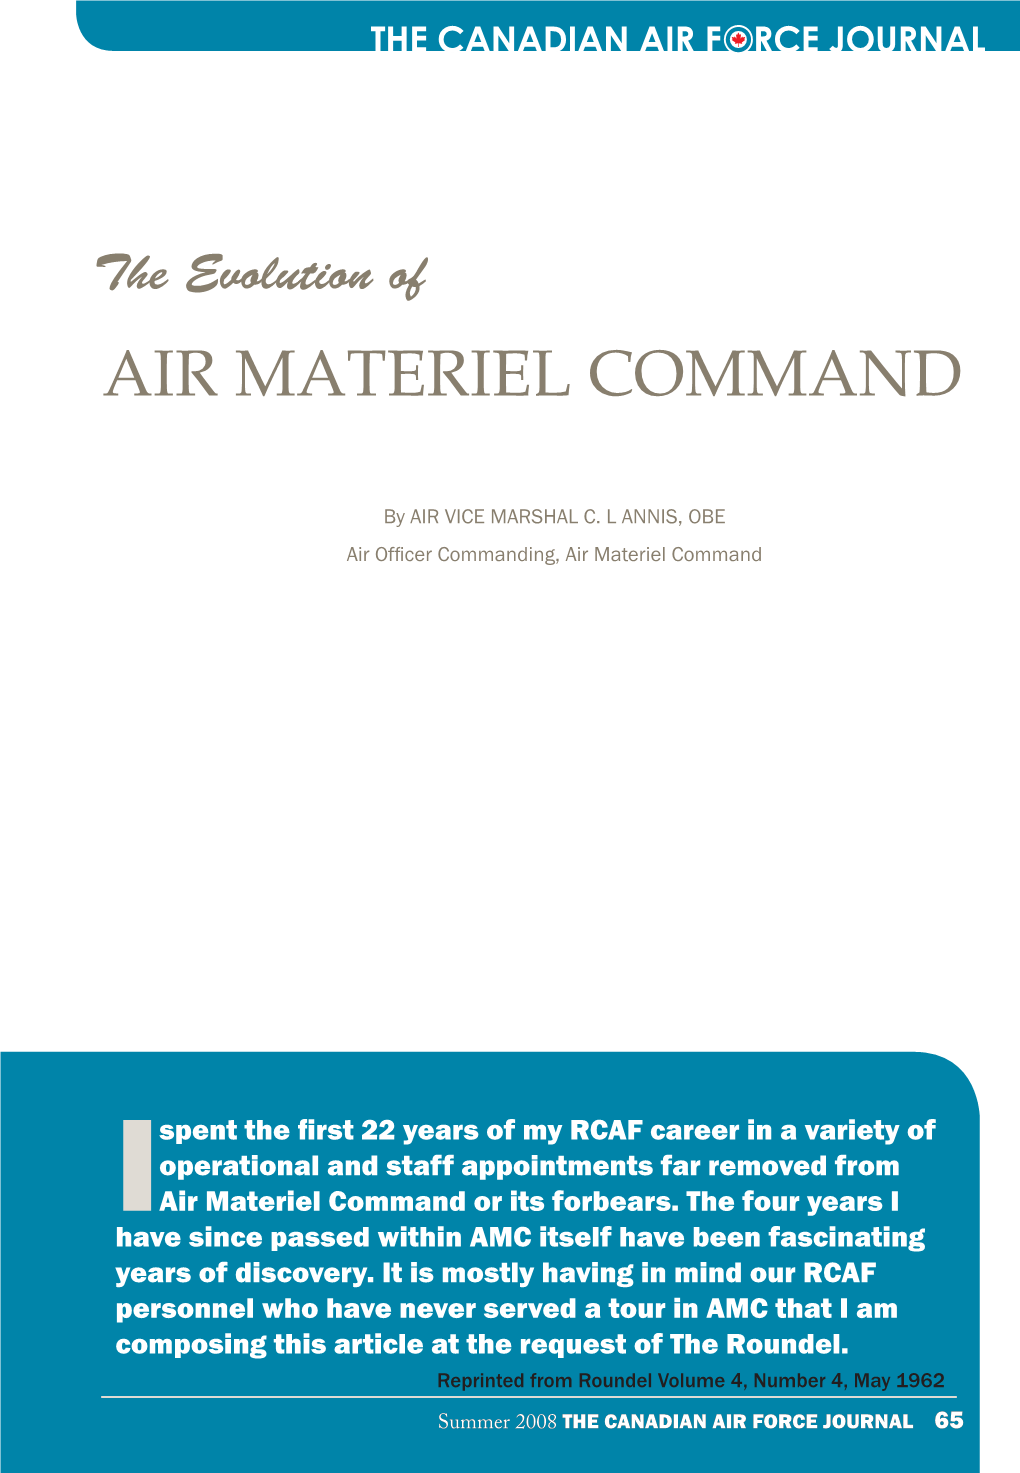 Air Materiel Command